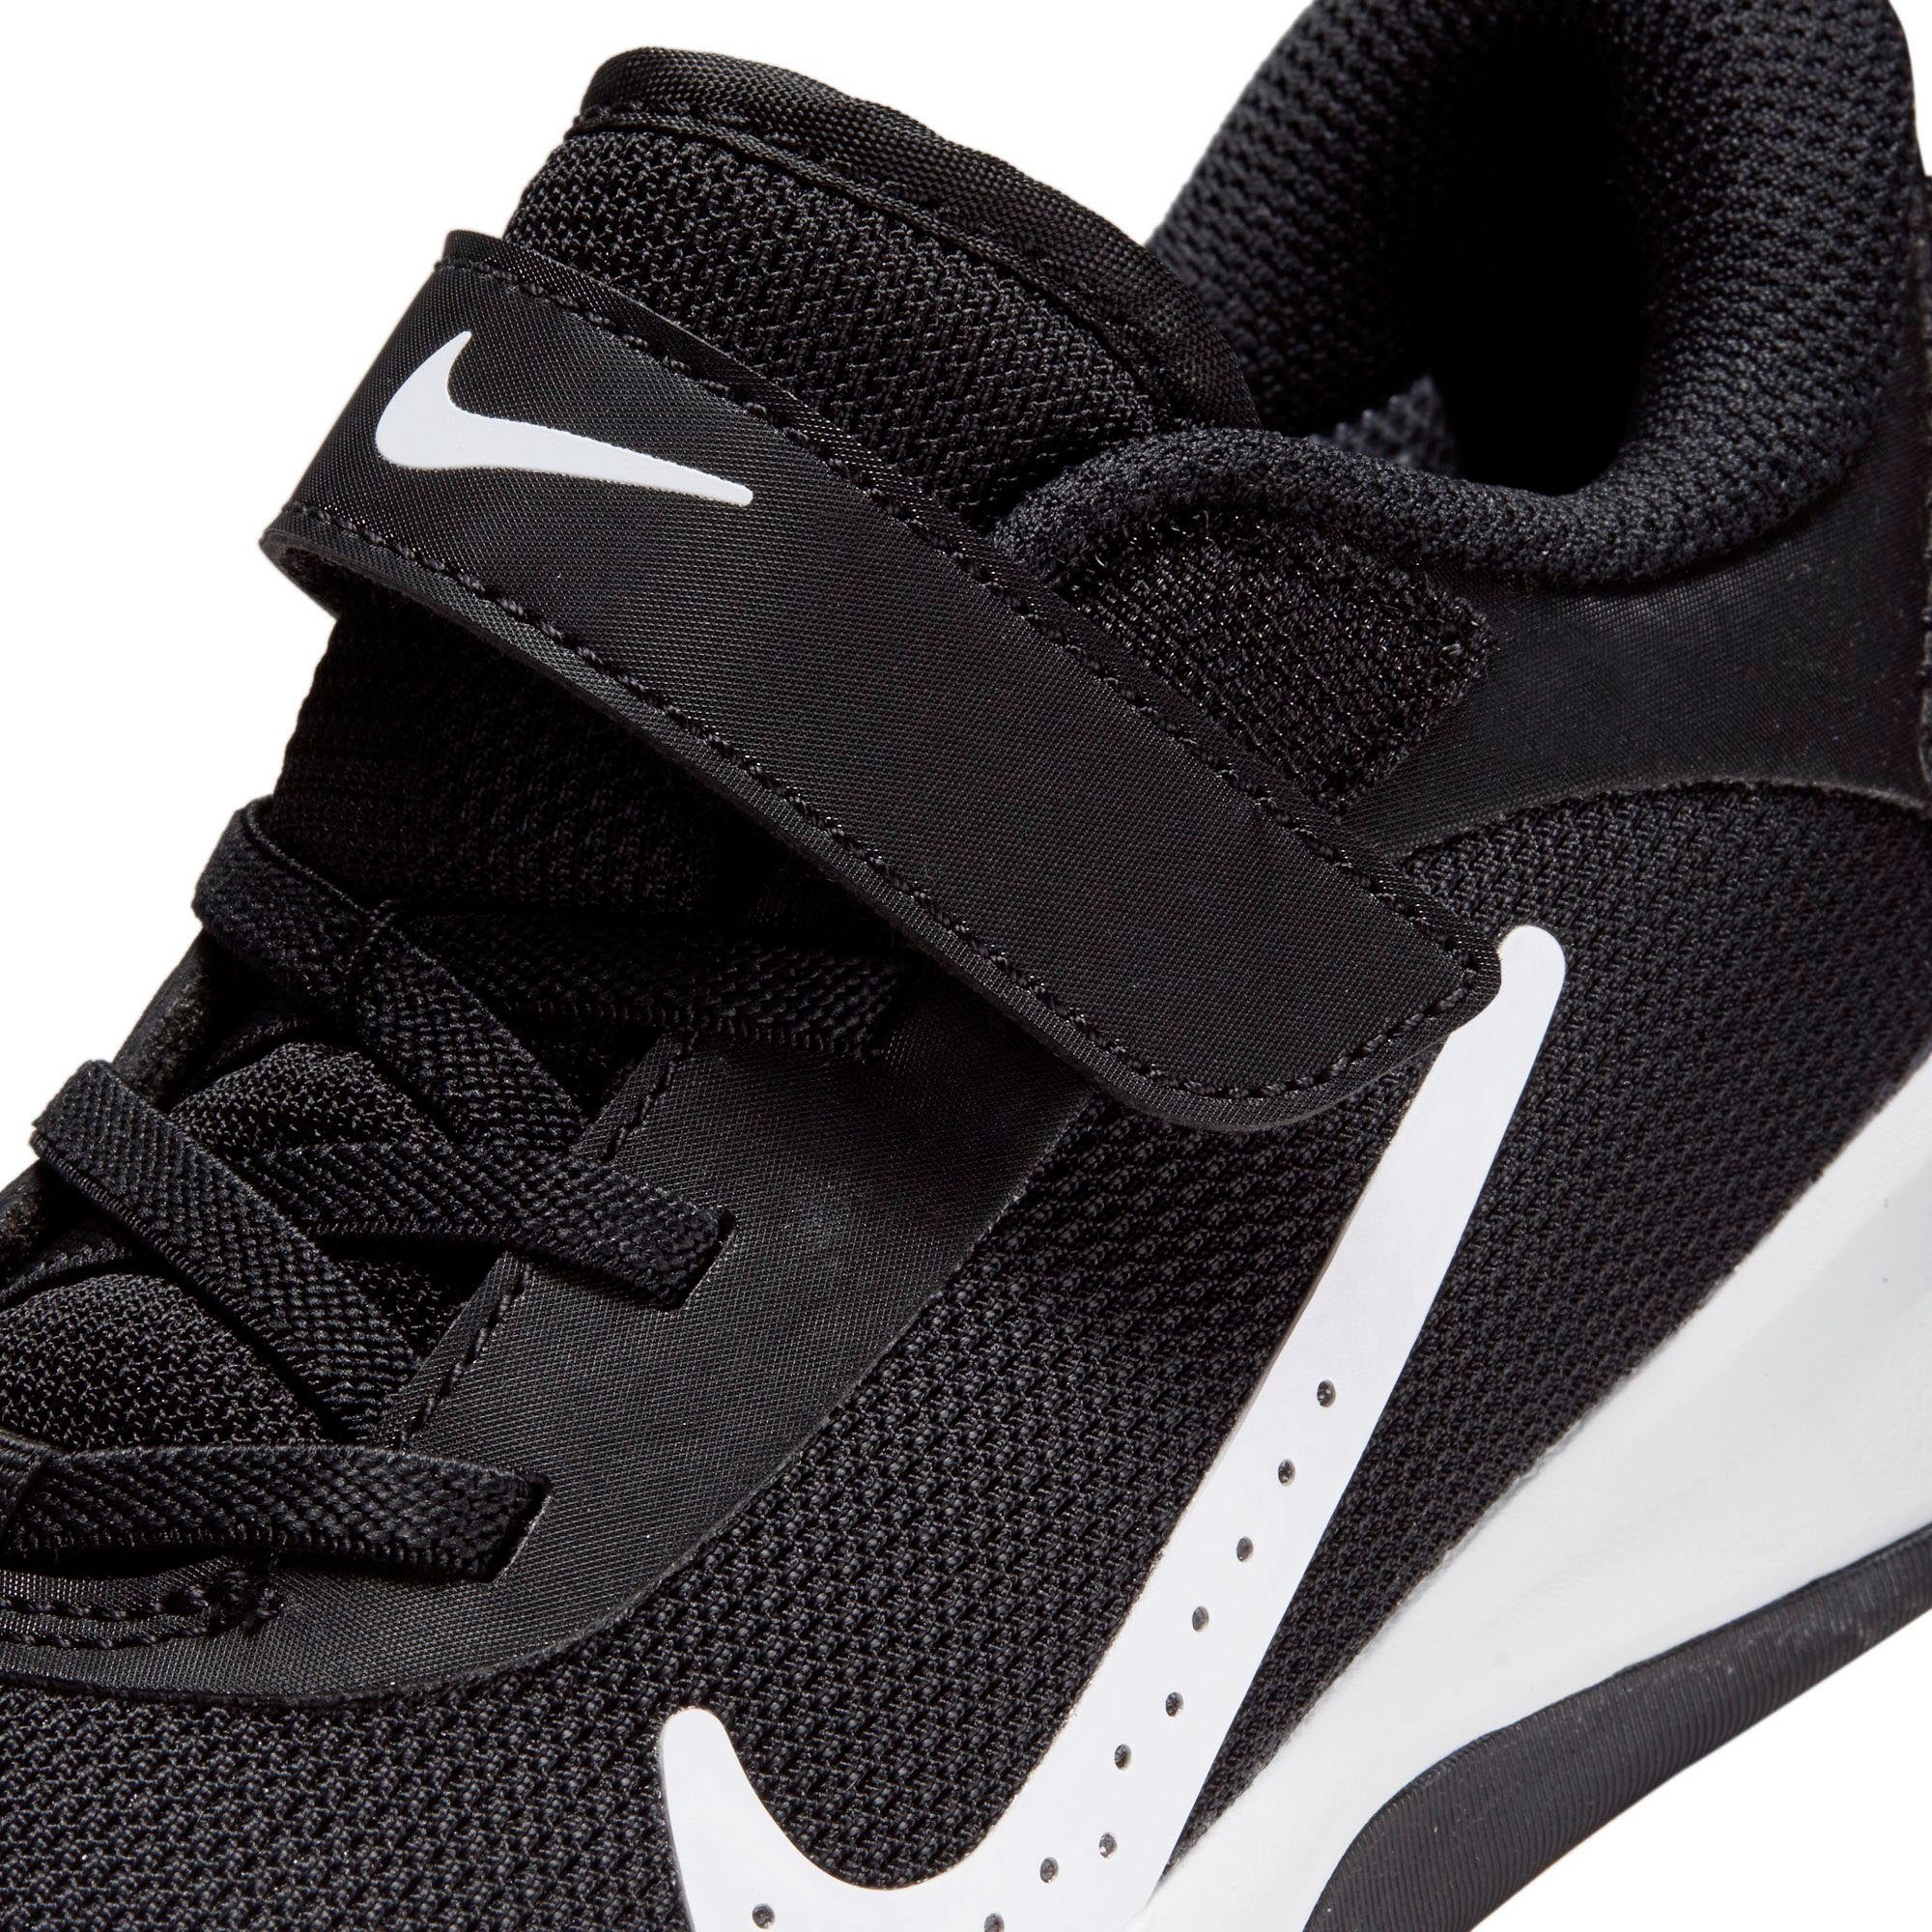 Hallenschuh black-white Omni (PS) Nike Multi-Court